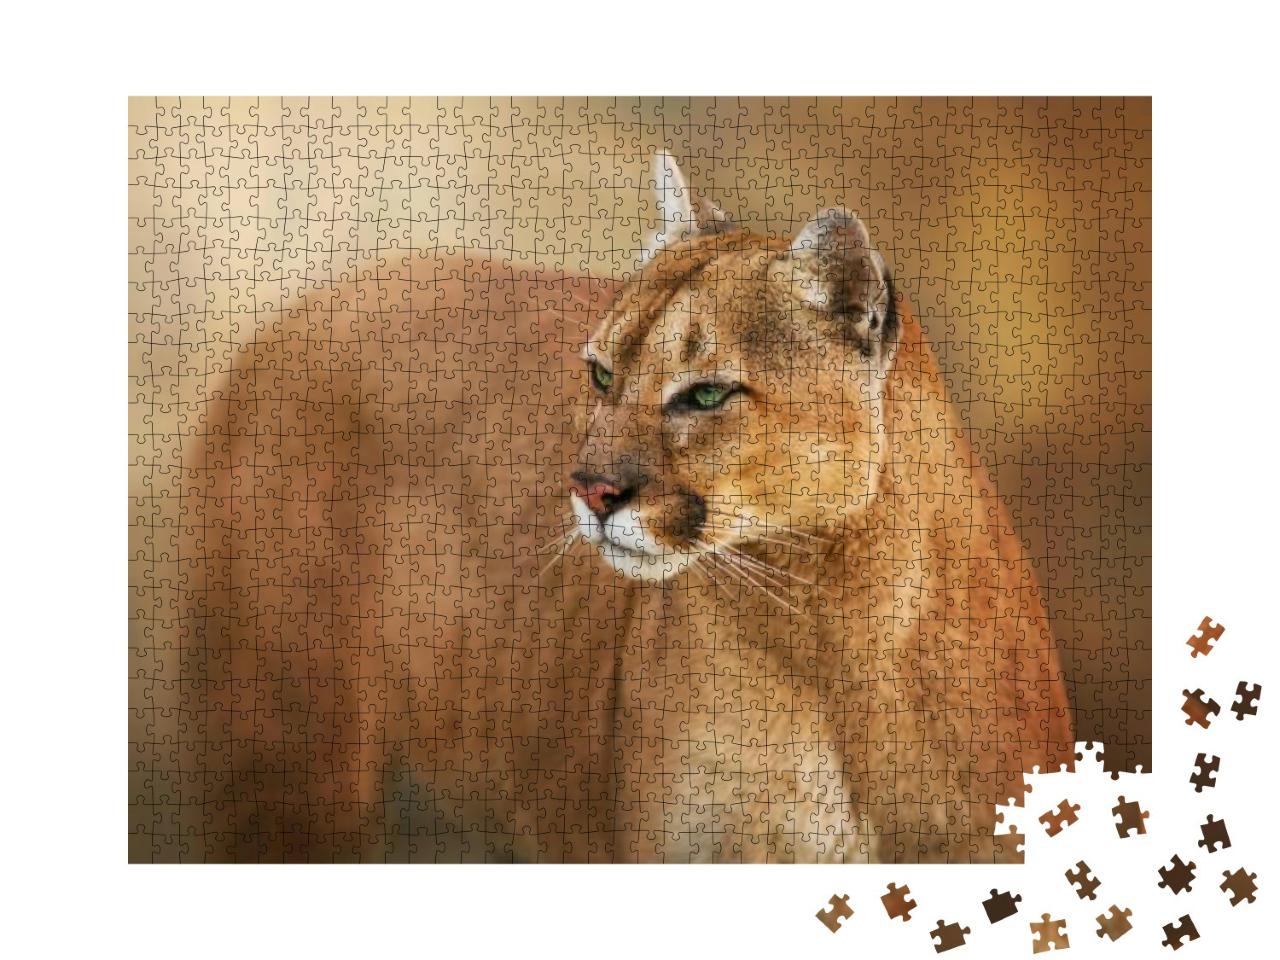 Puzzle 1000 Teile „Puma mit grünen Augen“